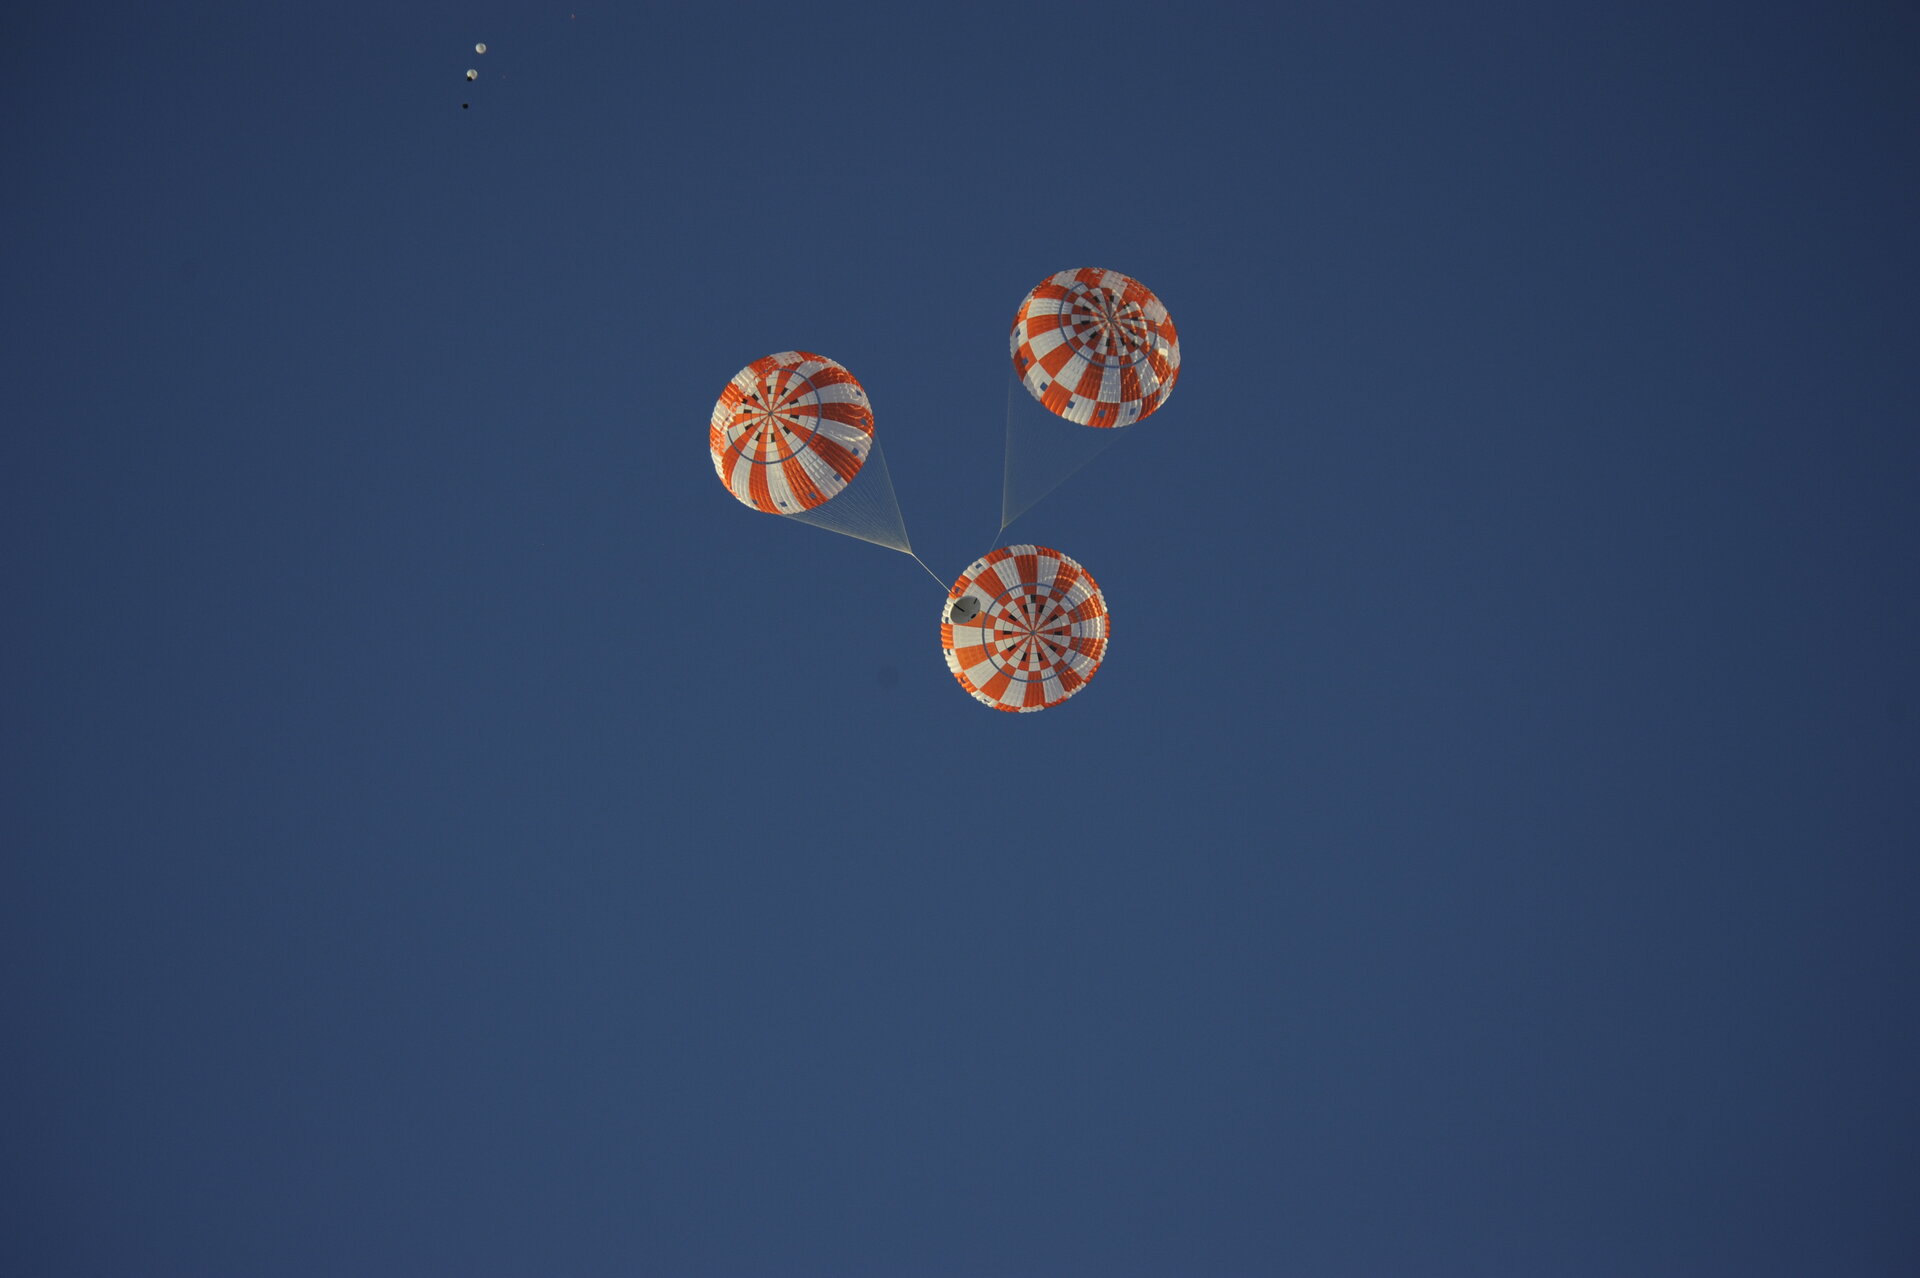 Orion crew capsule drop test